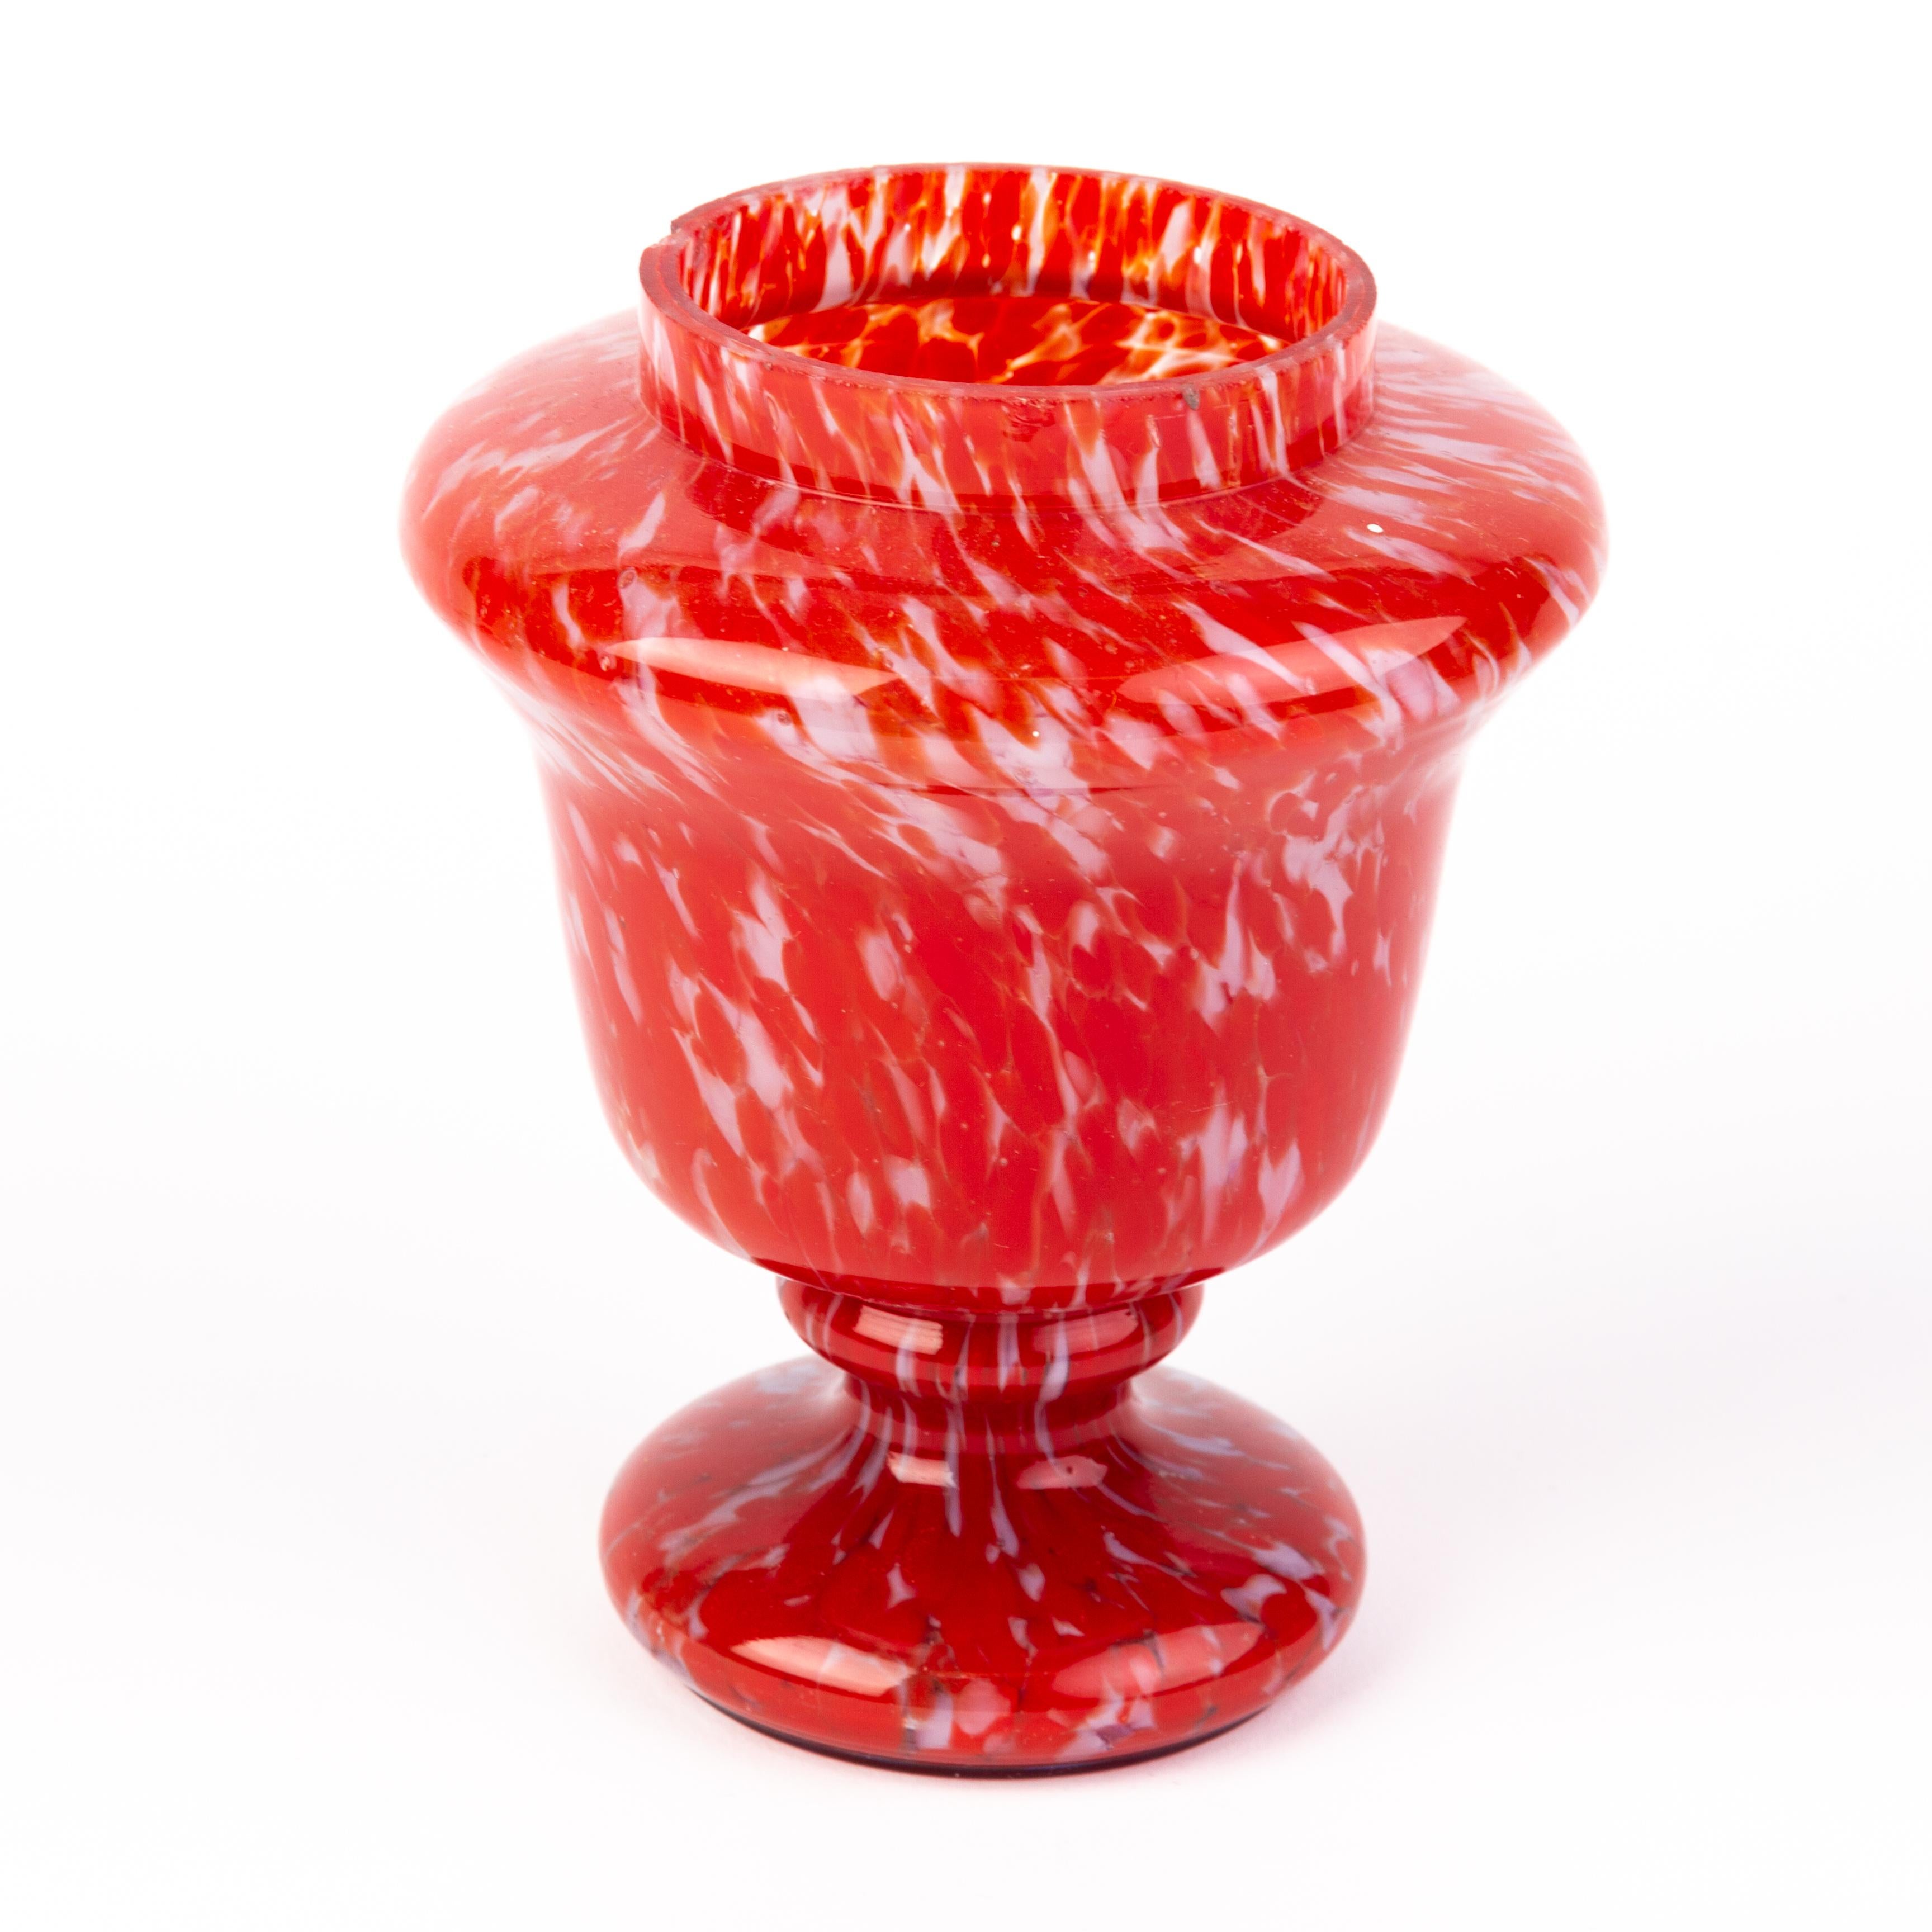 Art Deco Loetz Splatter Glass Vase
Good condition
Free international shipping.